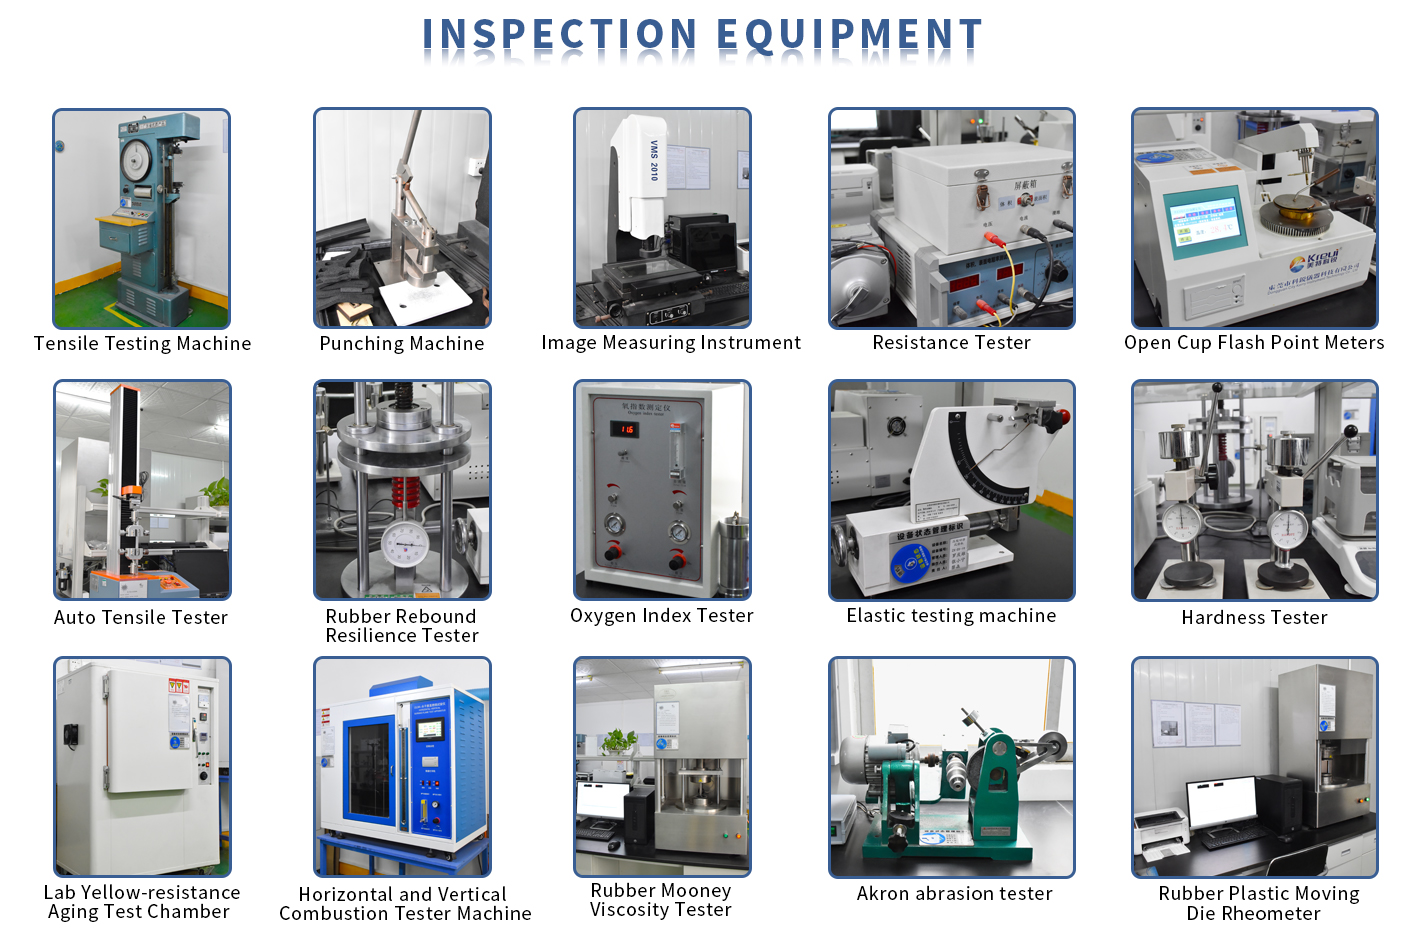 Inspection equipment